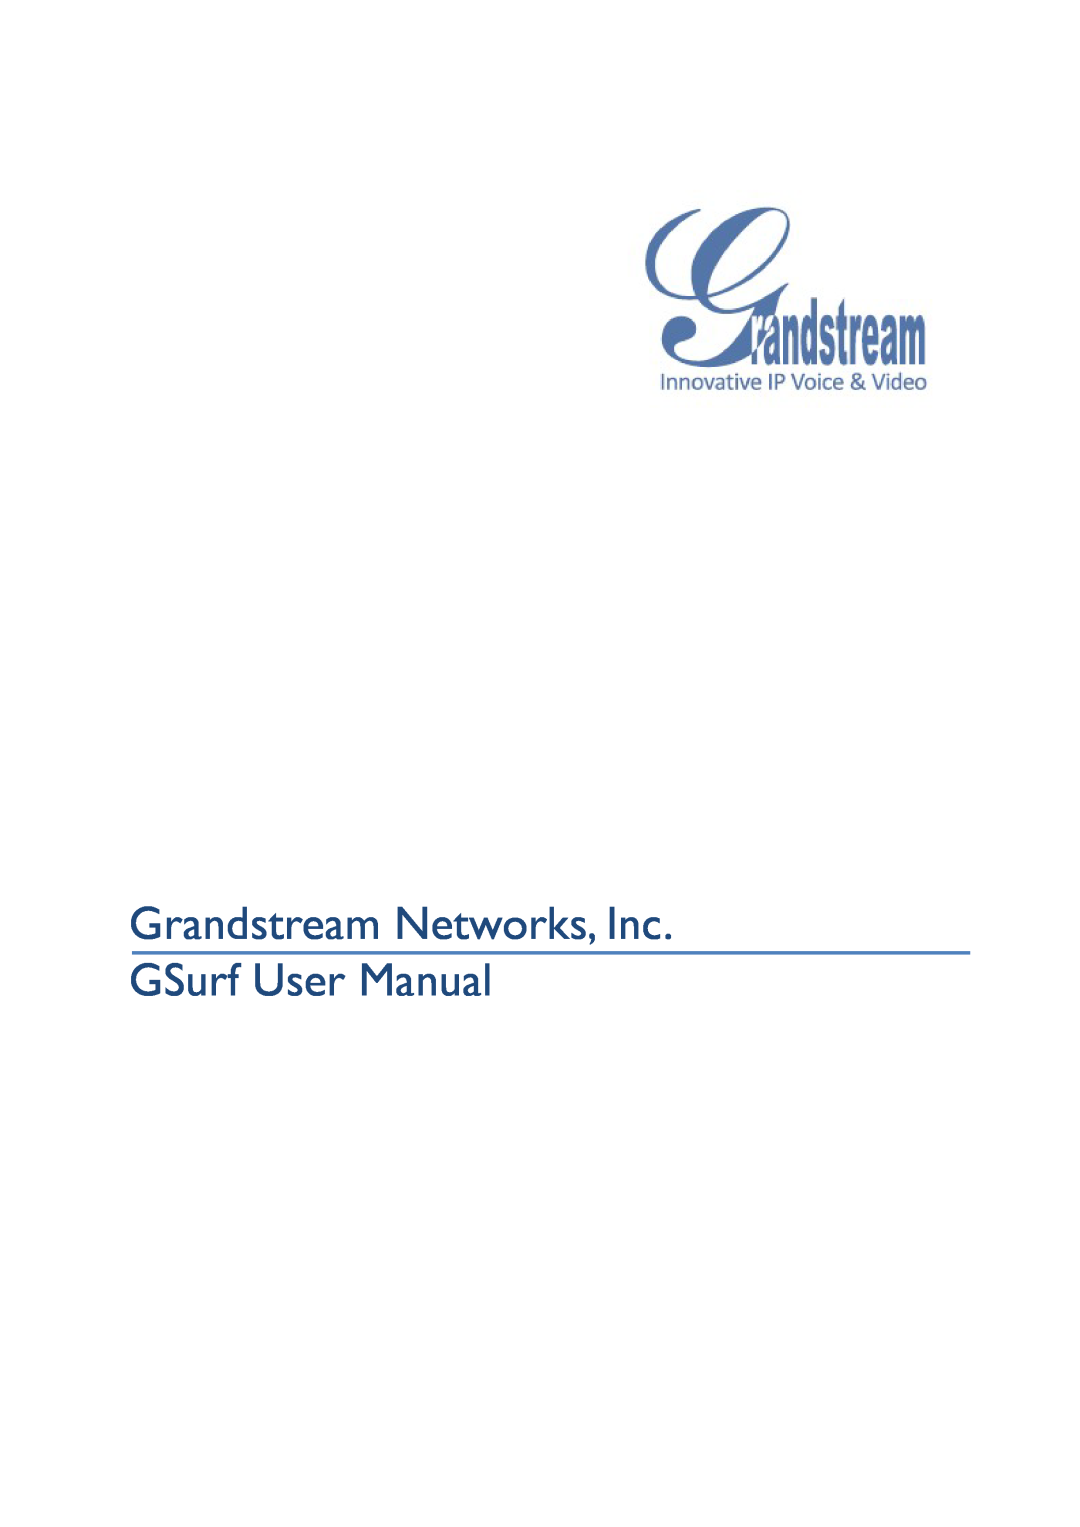 Grandstream Networks Security Camera user manual Grandstream Networks, Inc. GSurf User Manual 